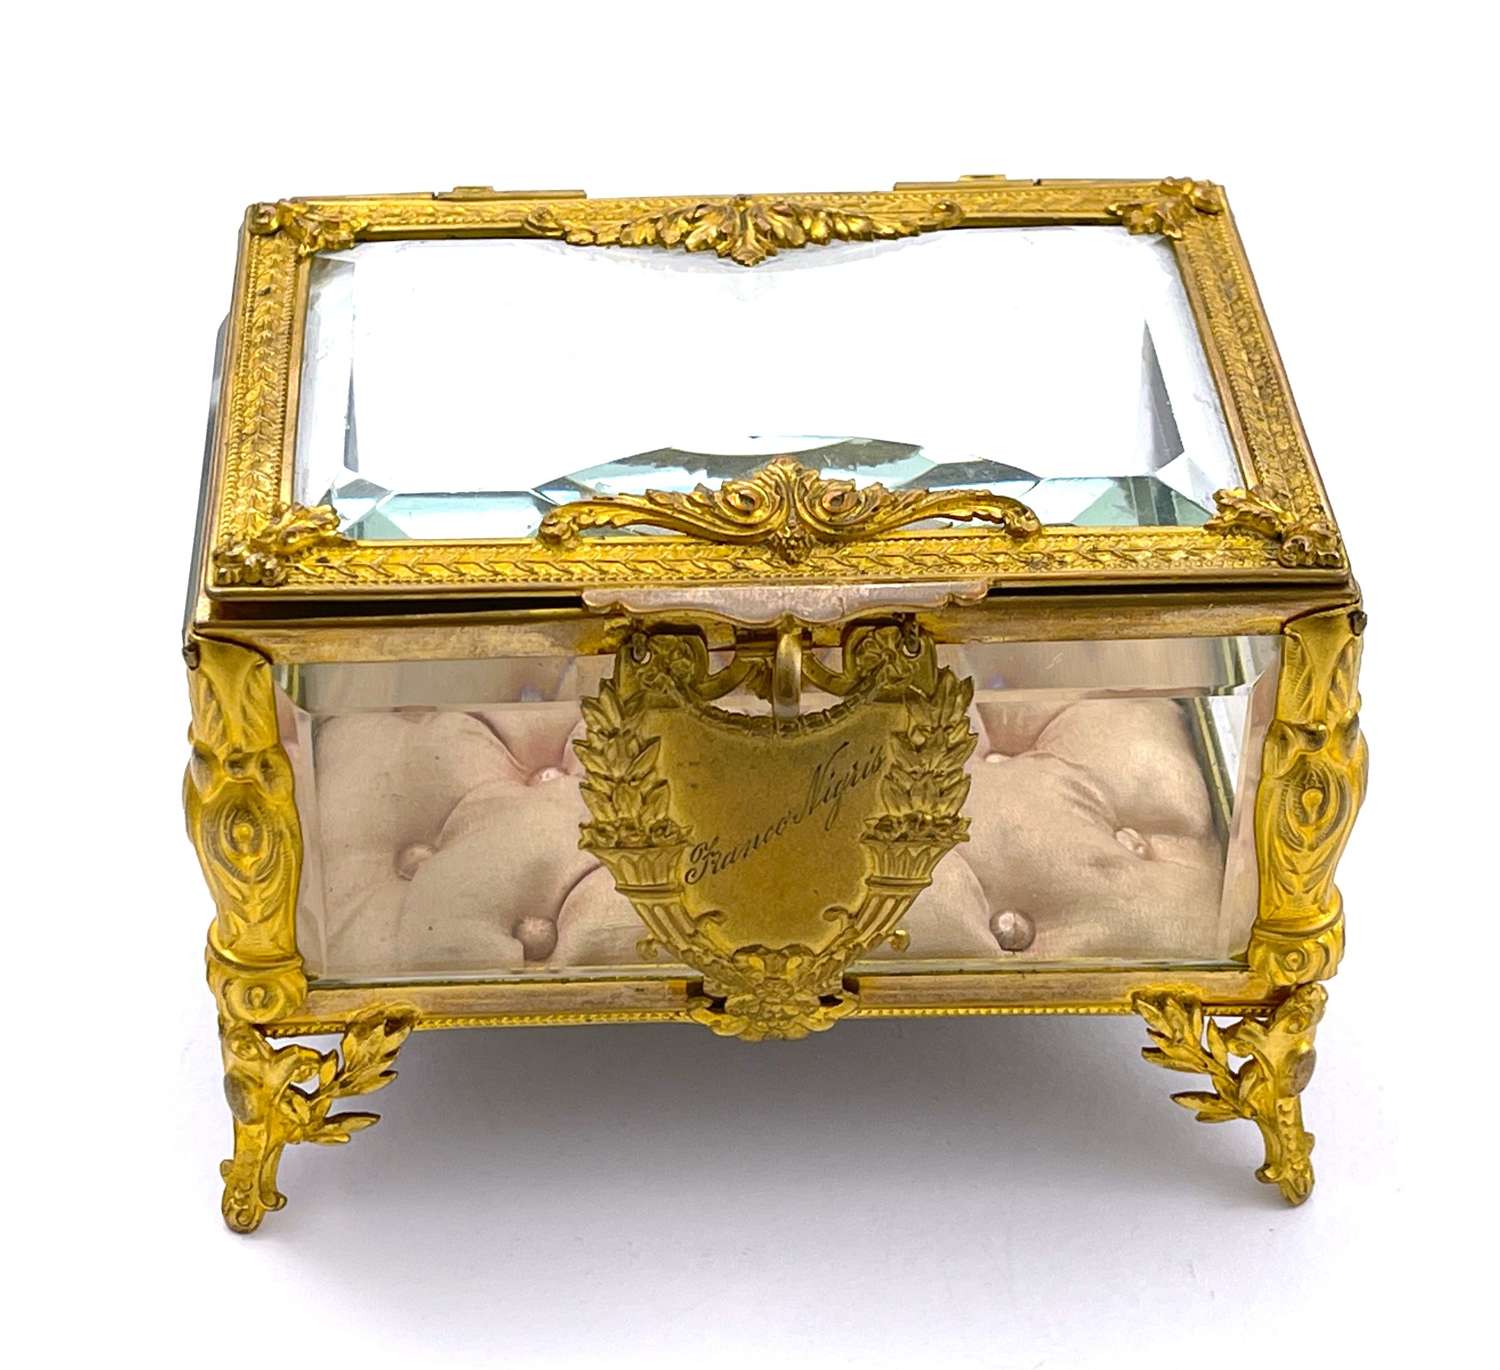 Antique French Empire Jewellery Casket Box with Original Silk Interior